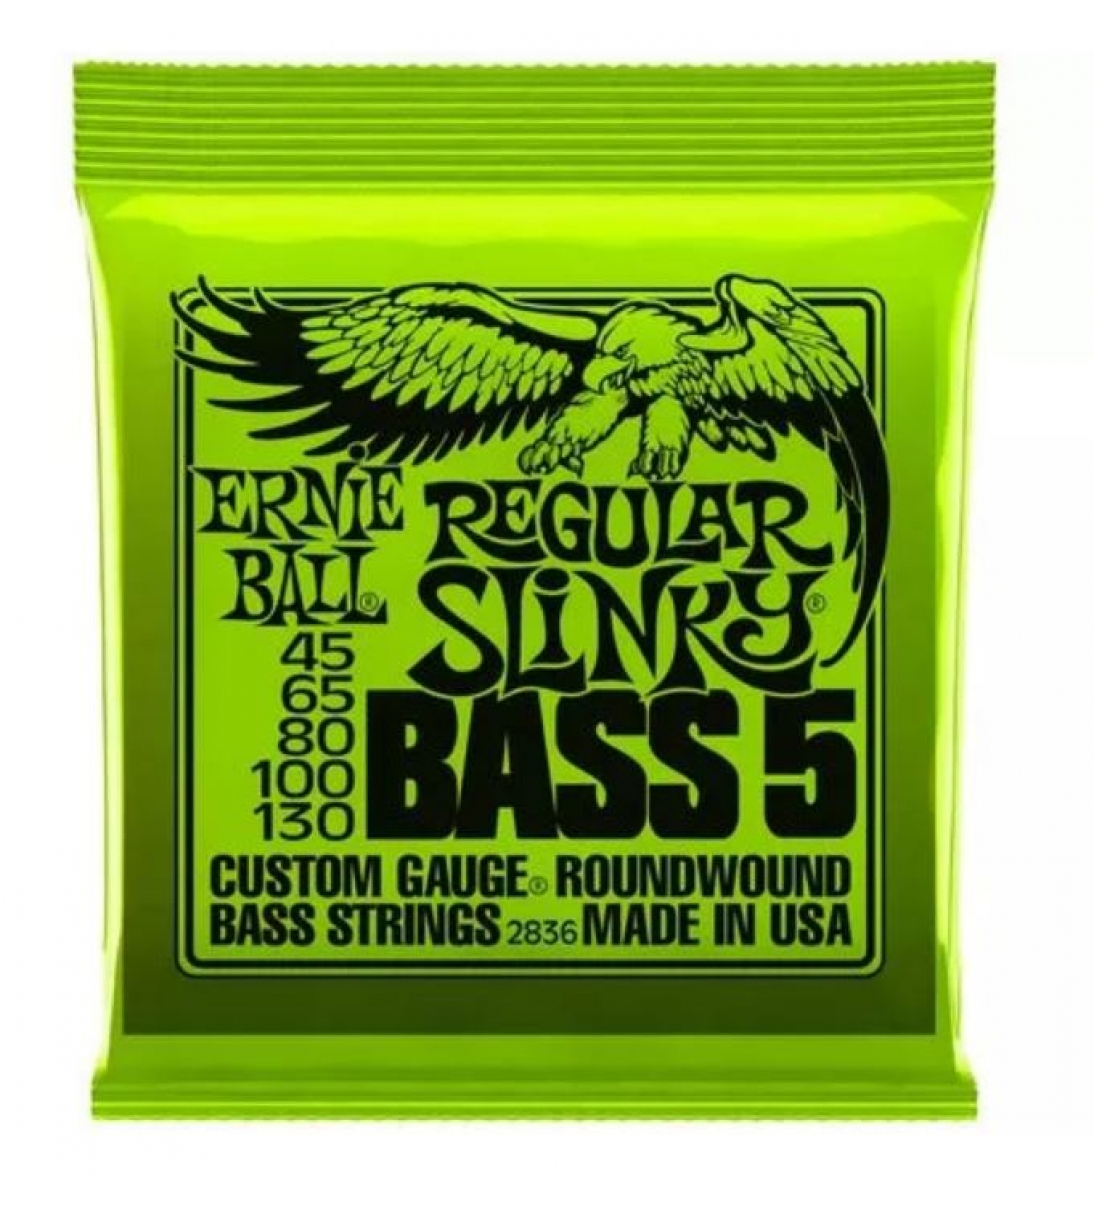 Corde per Basso 2836 Regular Slinky Bass 5 045/130